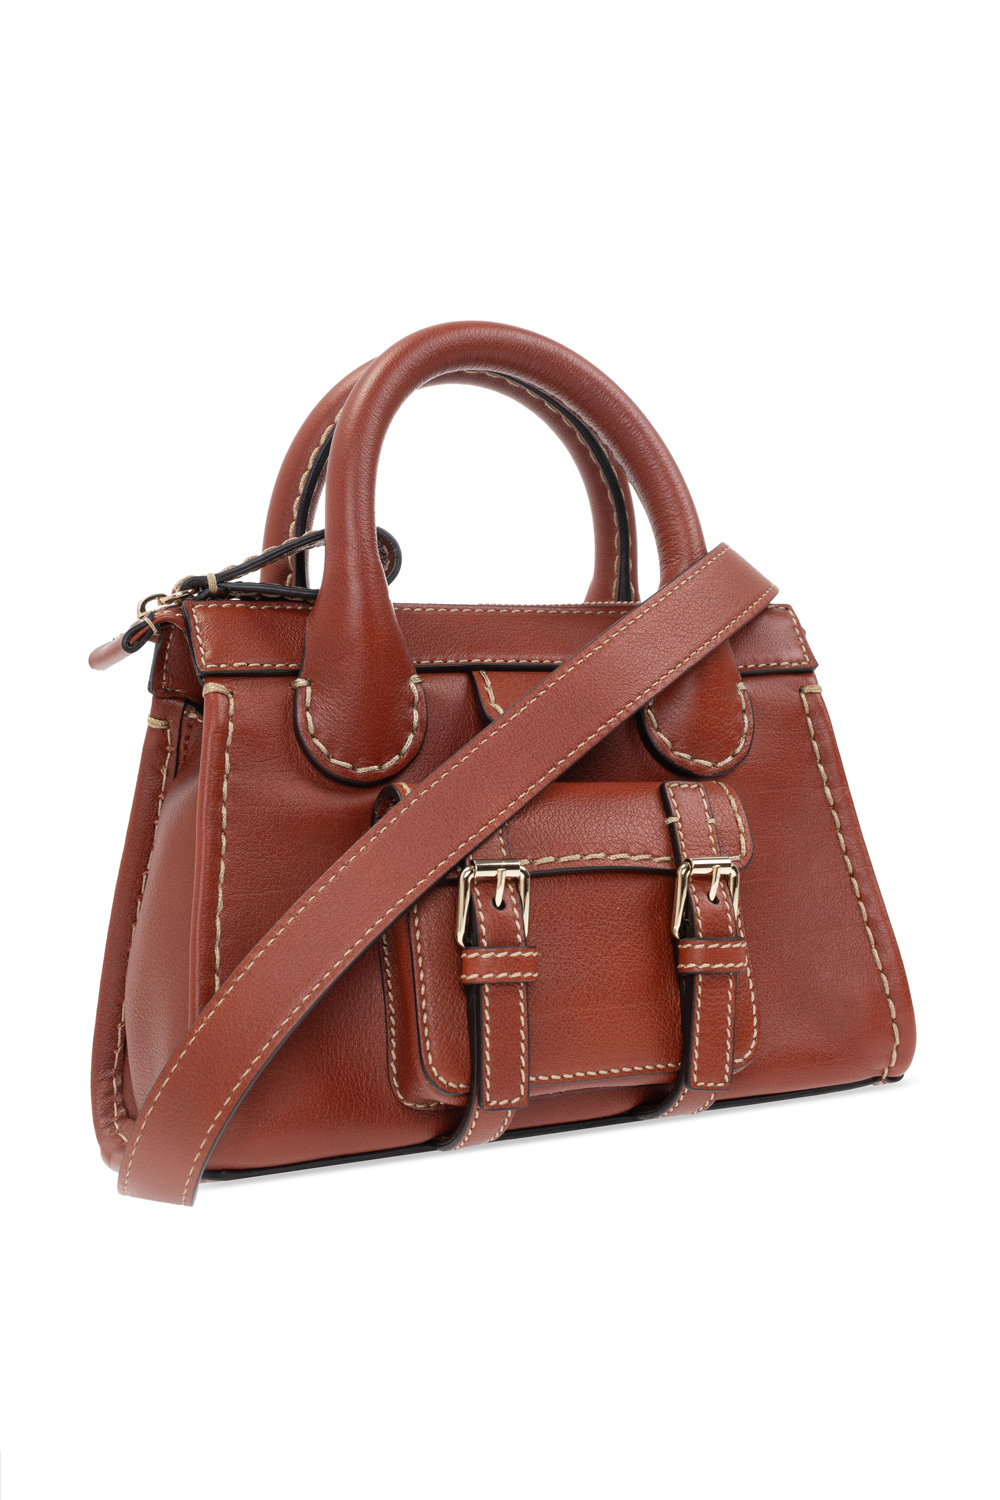 Chloé 'Edith Mini' shoulder bag, Women's Bags